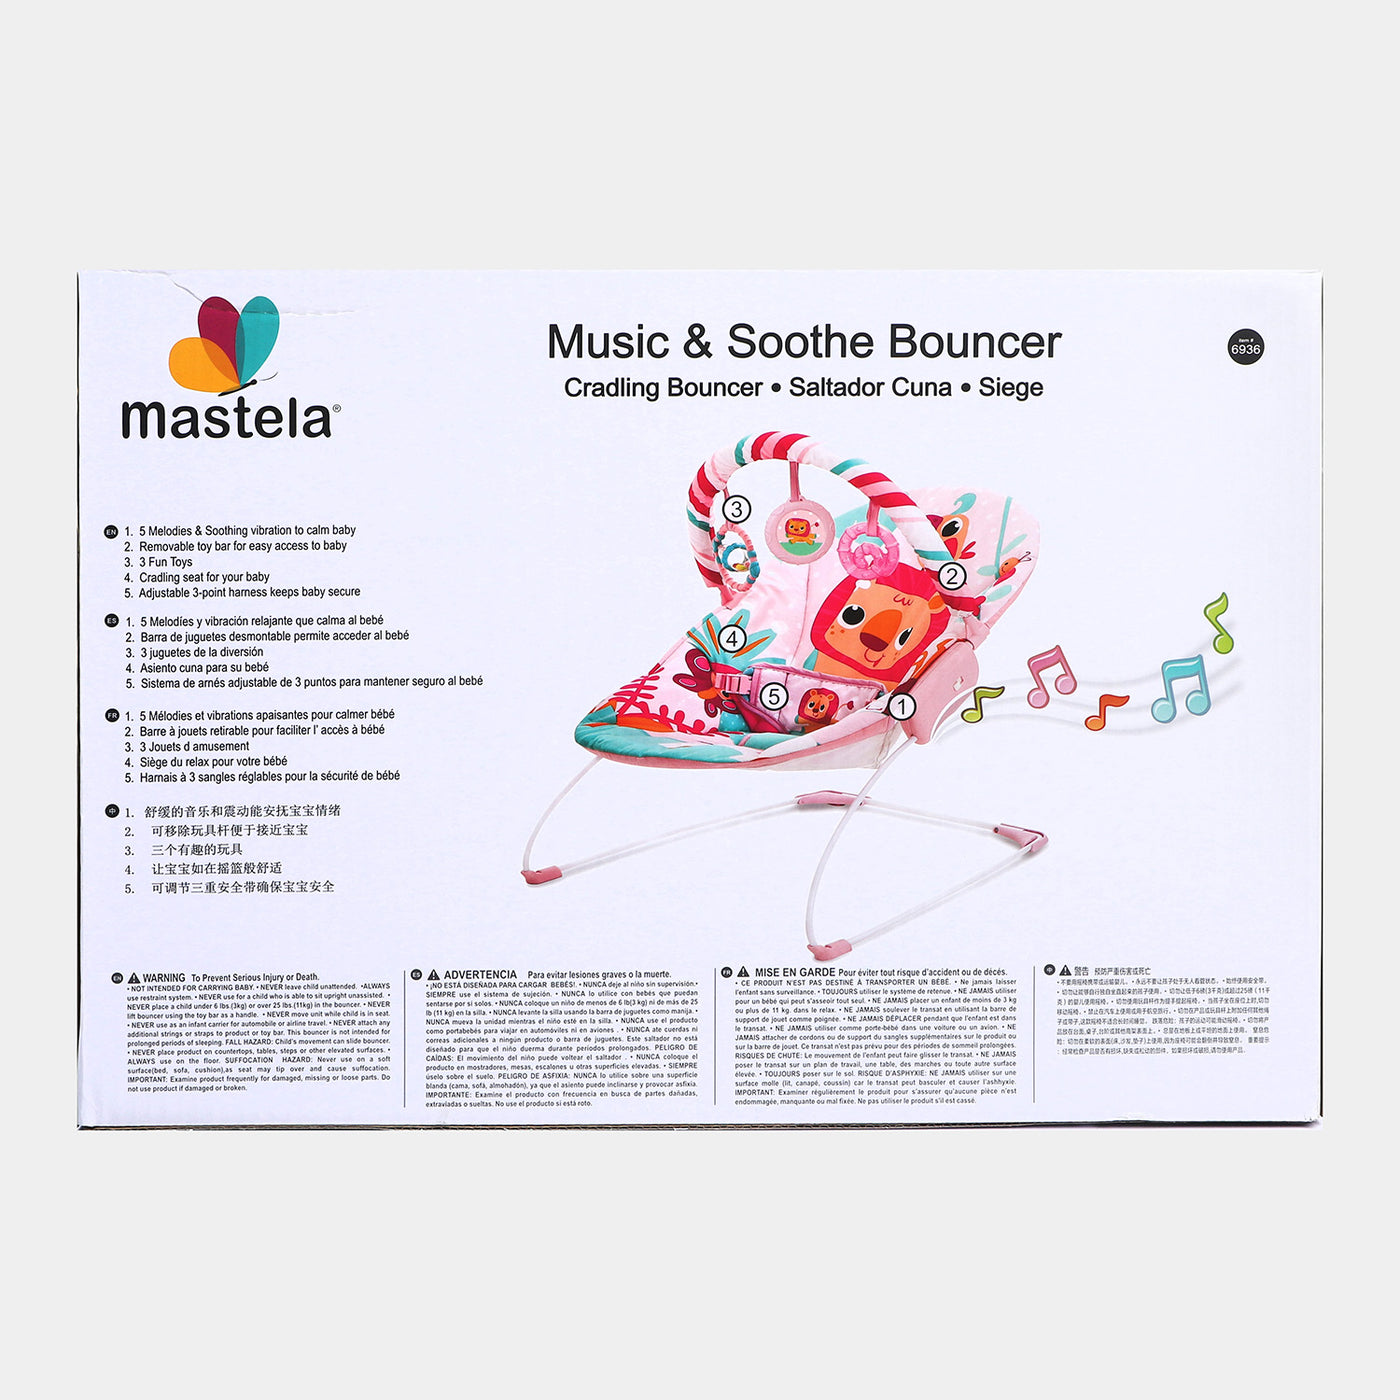 Music & Soothe Bouncer (mastela)